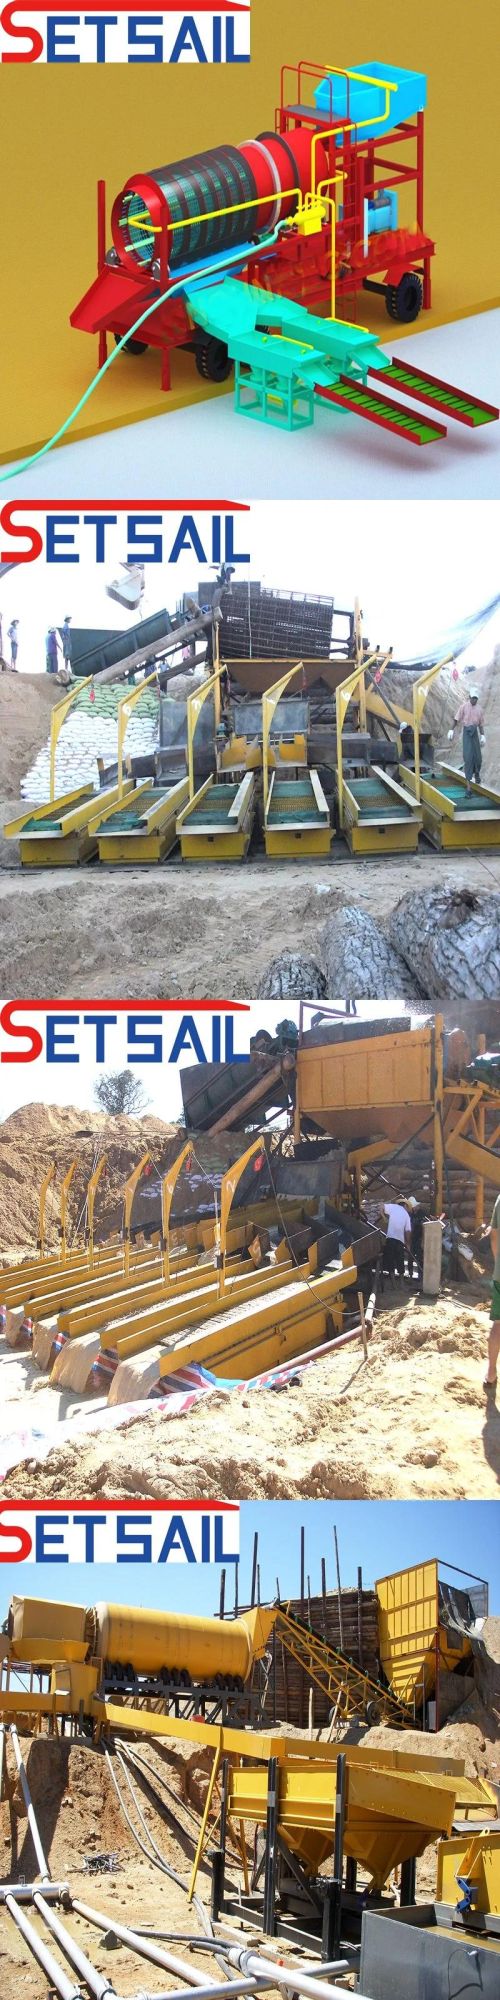 Diesel Engine Power Land Mining Equipment for Gold